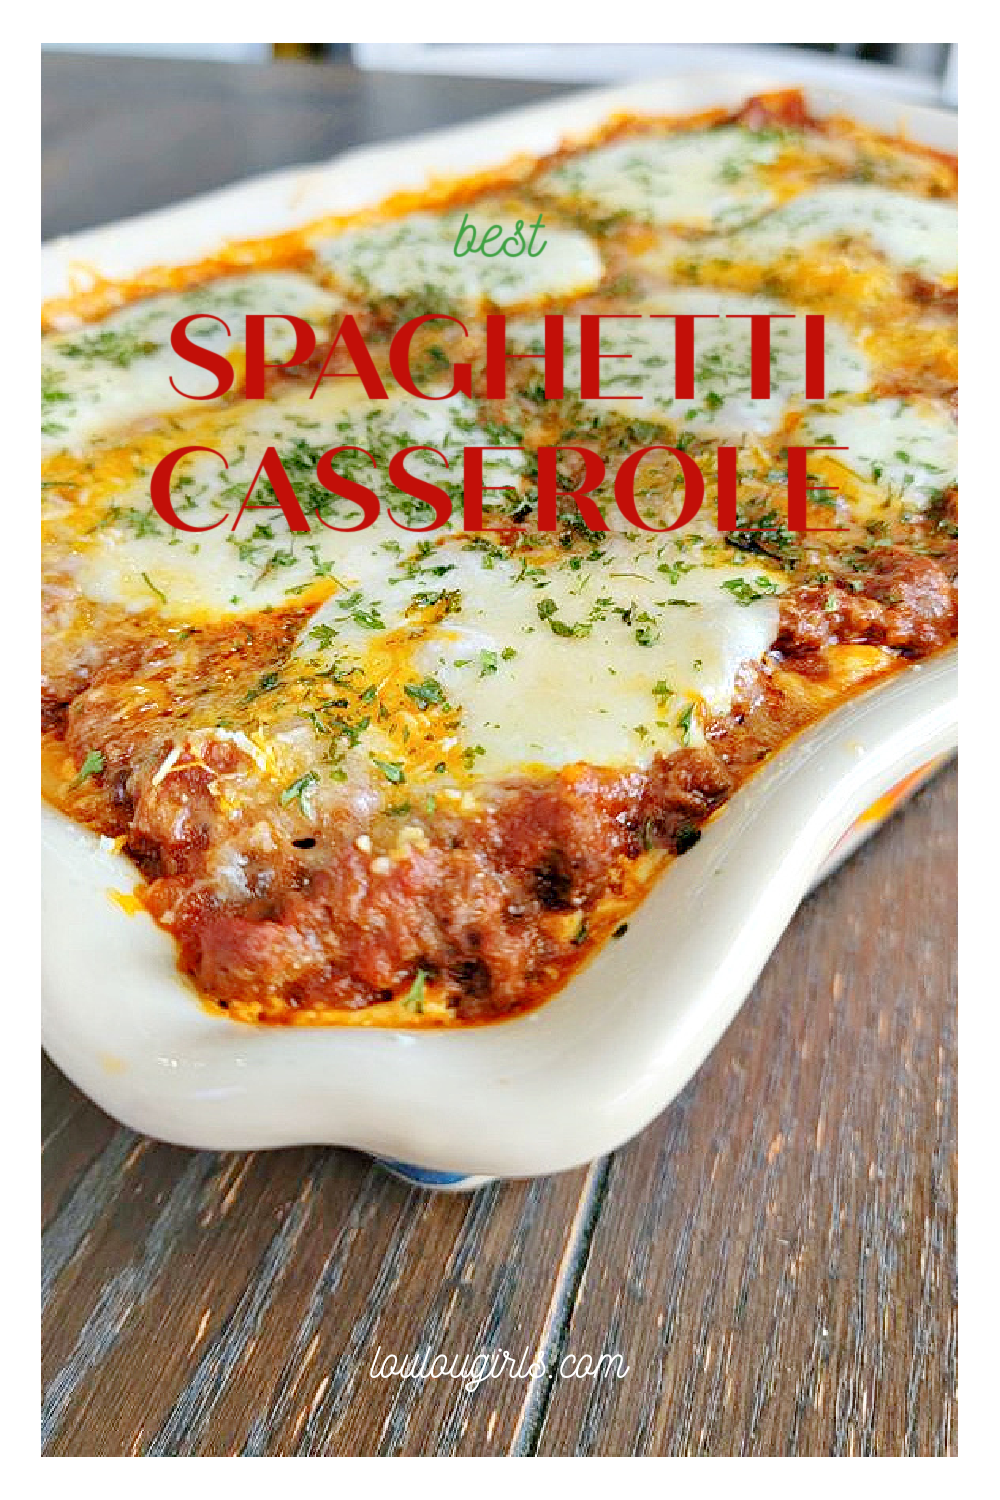 Best Spaghetti Casserole #casserole #spaghetti #easyrecipe #dinner